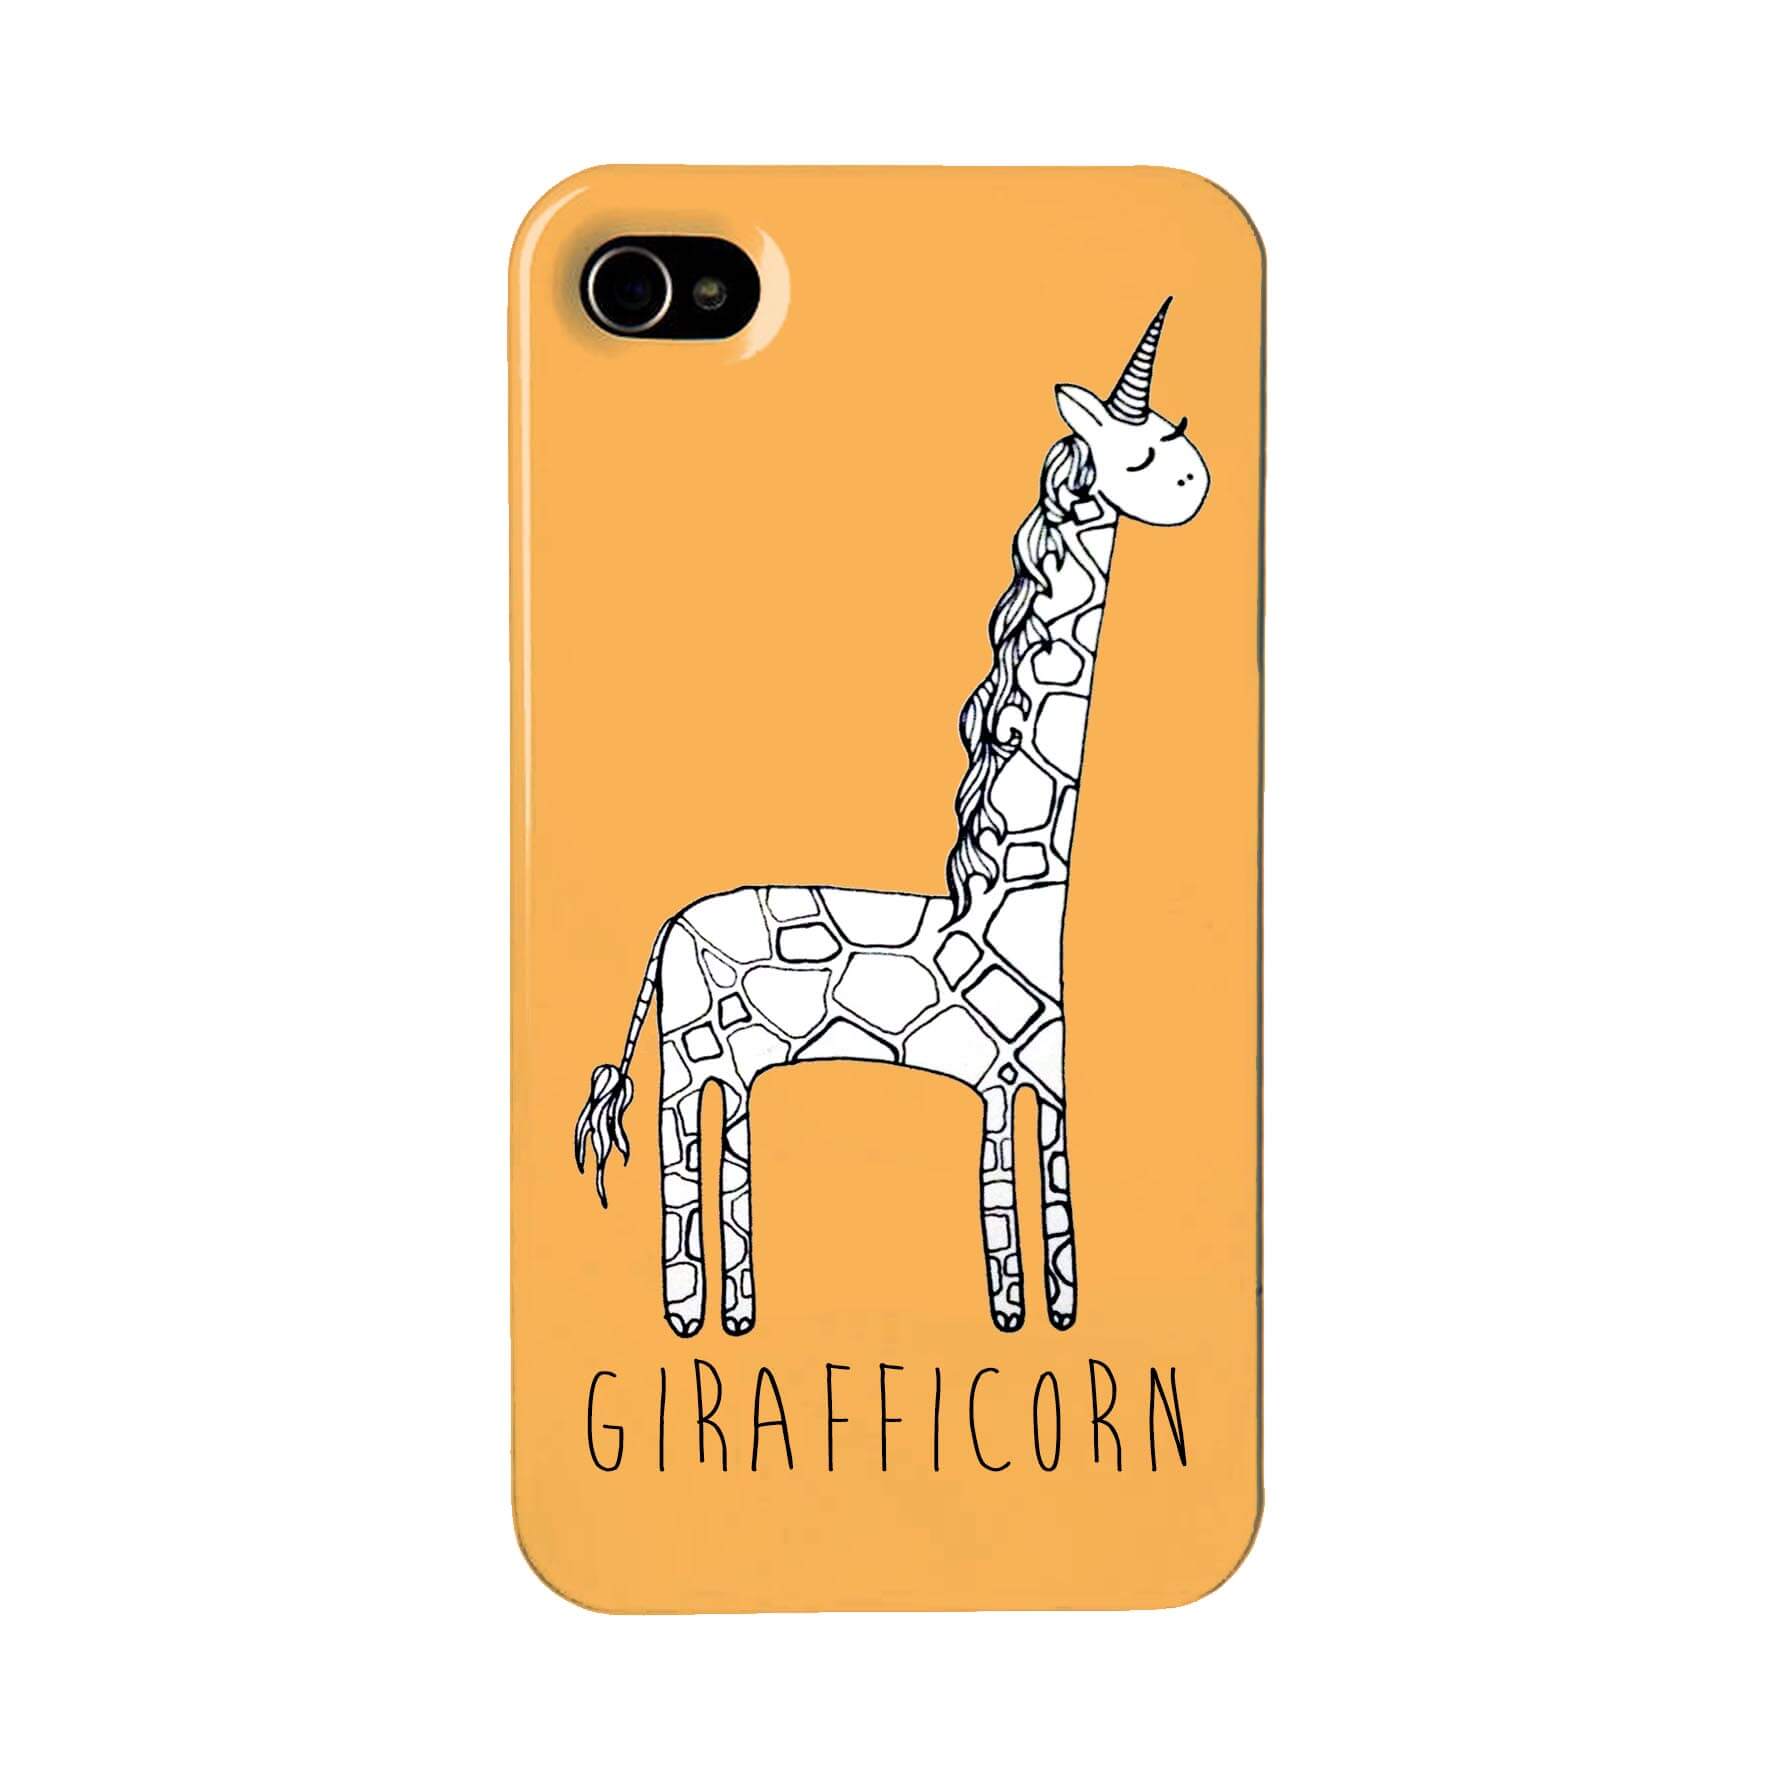 Orange, giraffe unicorn phone case